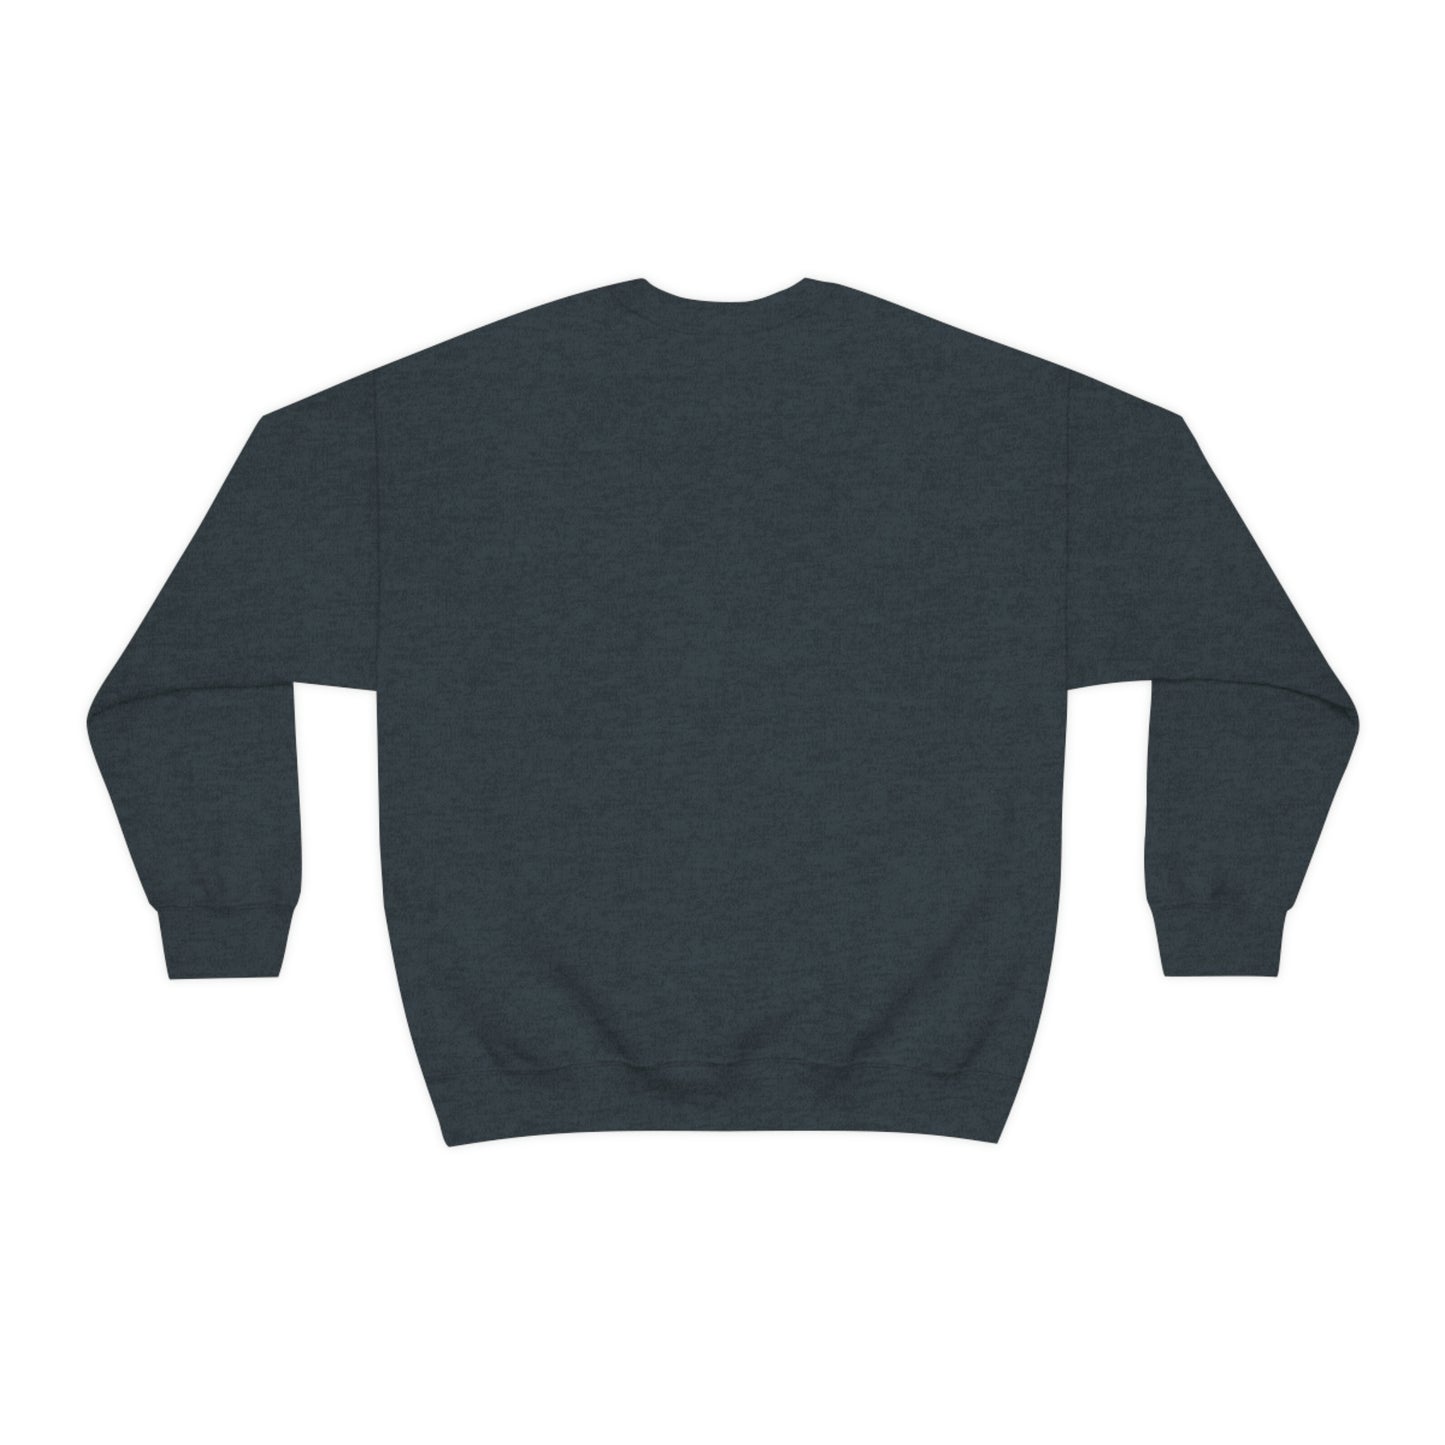 LIFE YA Unisex Heavy Blend™ Crewneck Sweatshirt